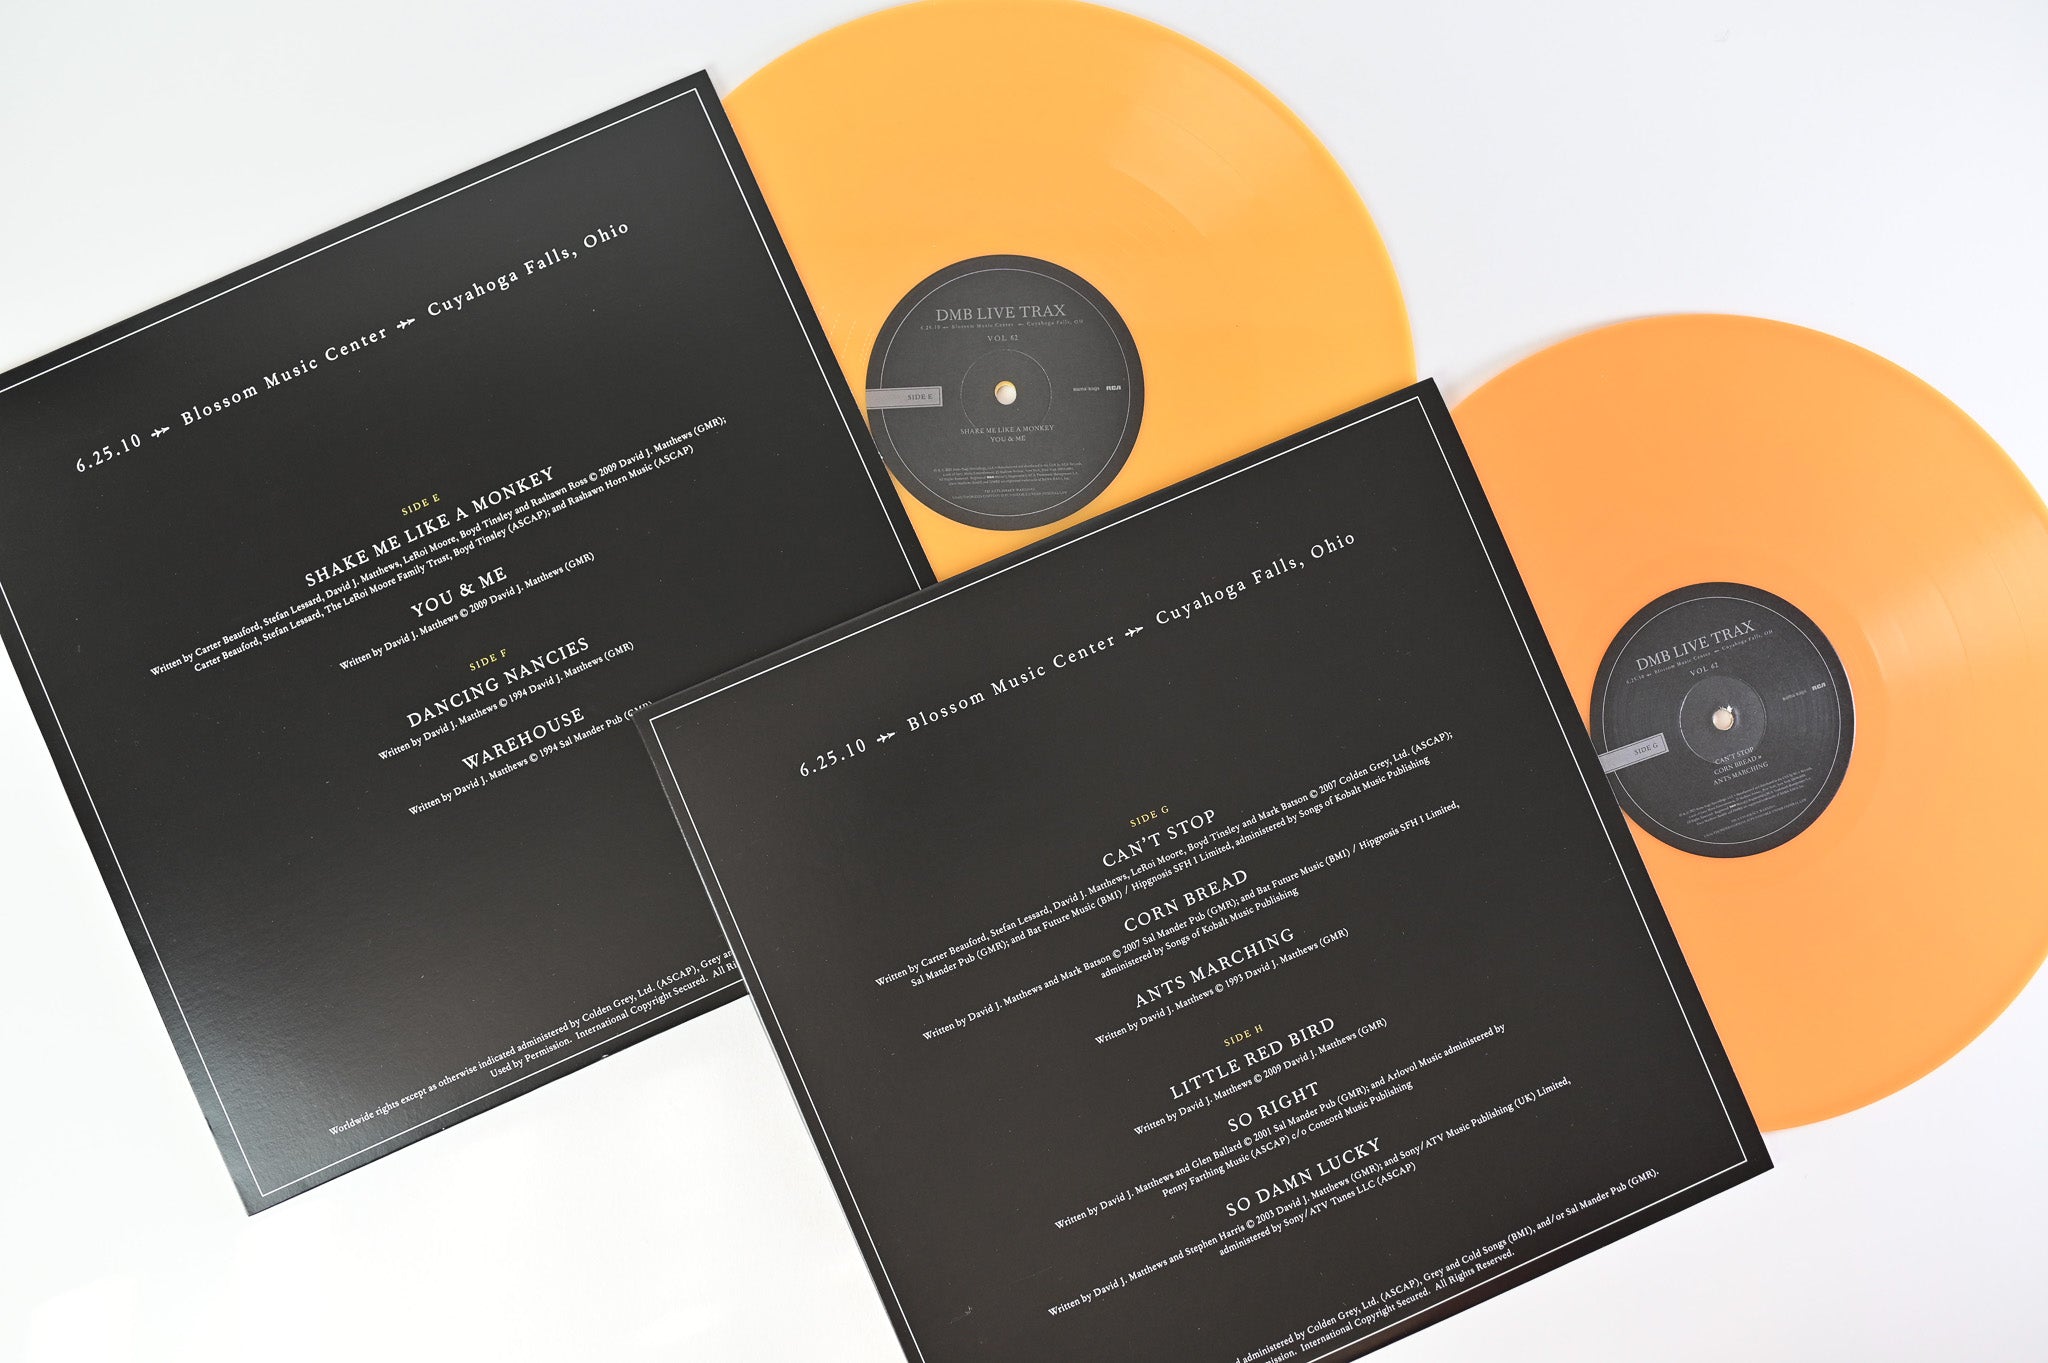 Dave Matthews Band - DMB Live Trax Vol. 62 on Bama Rags Ltd Numbered Yellow Vinyl Box Set